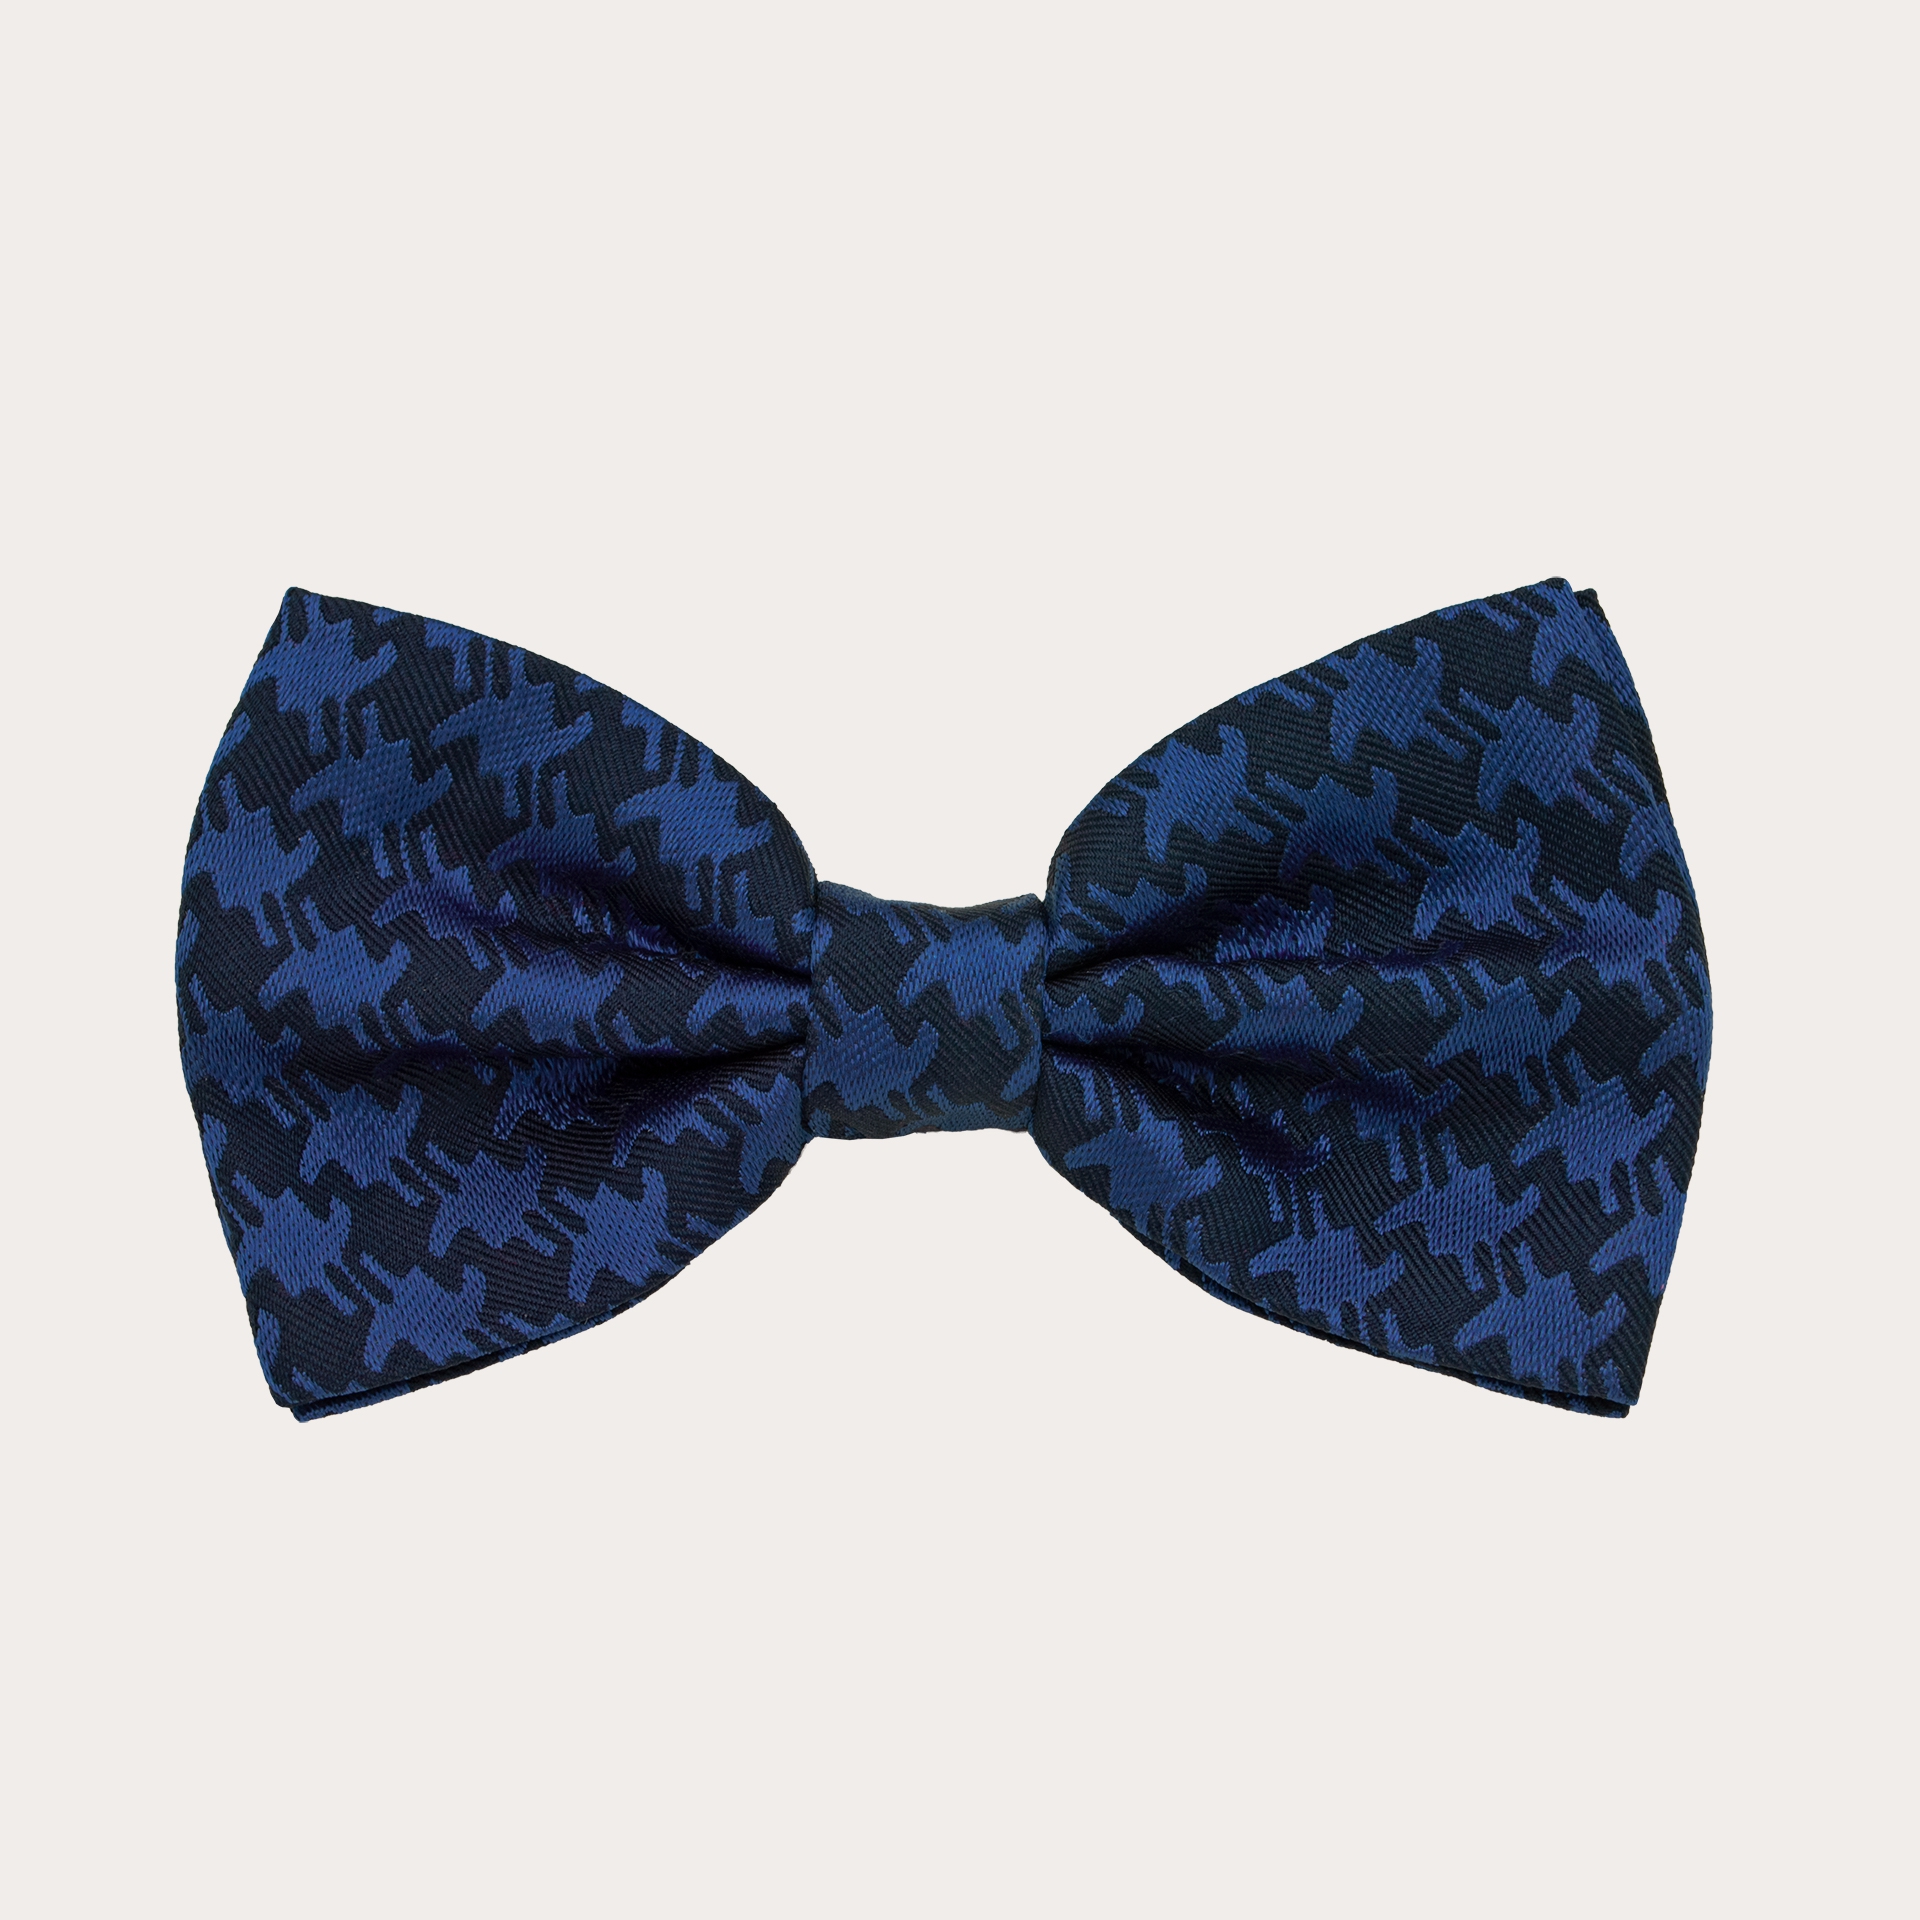 Silk pre-tied bow tie, blue dot and pied de poule